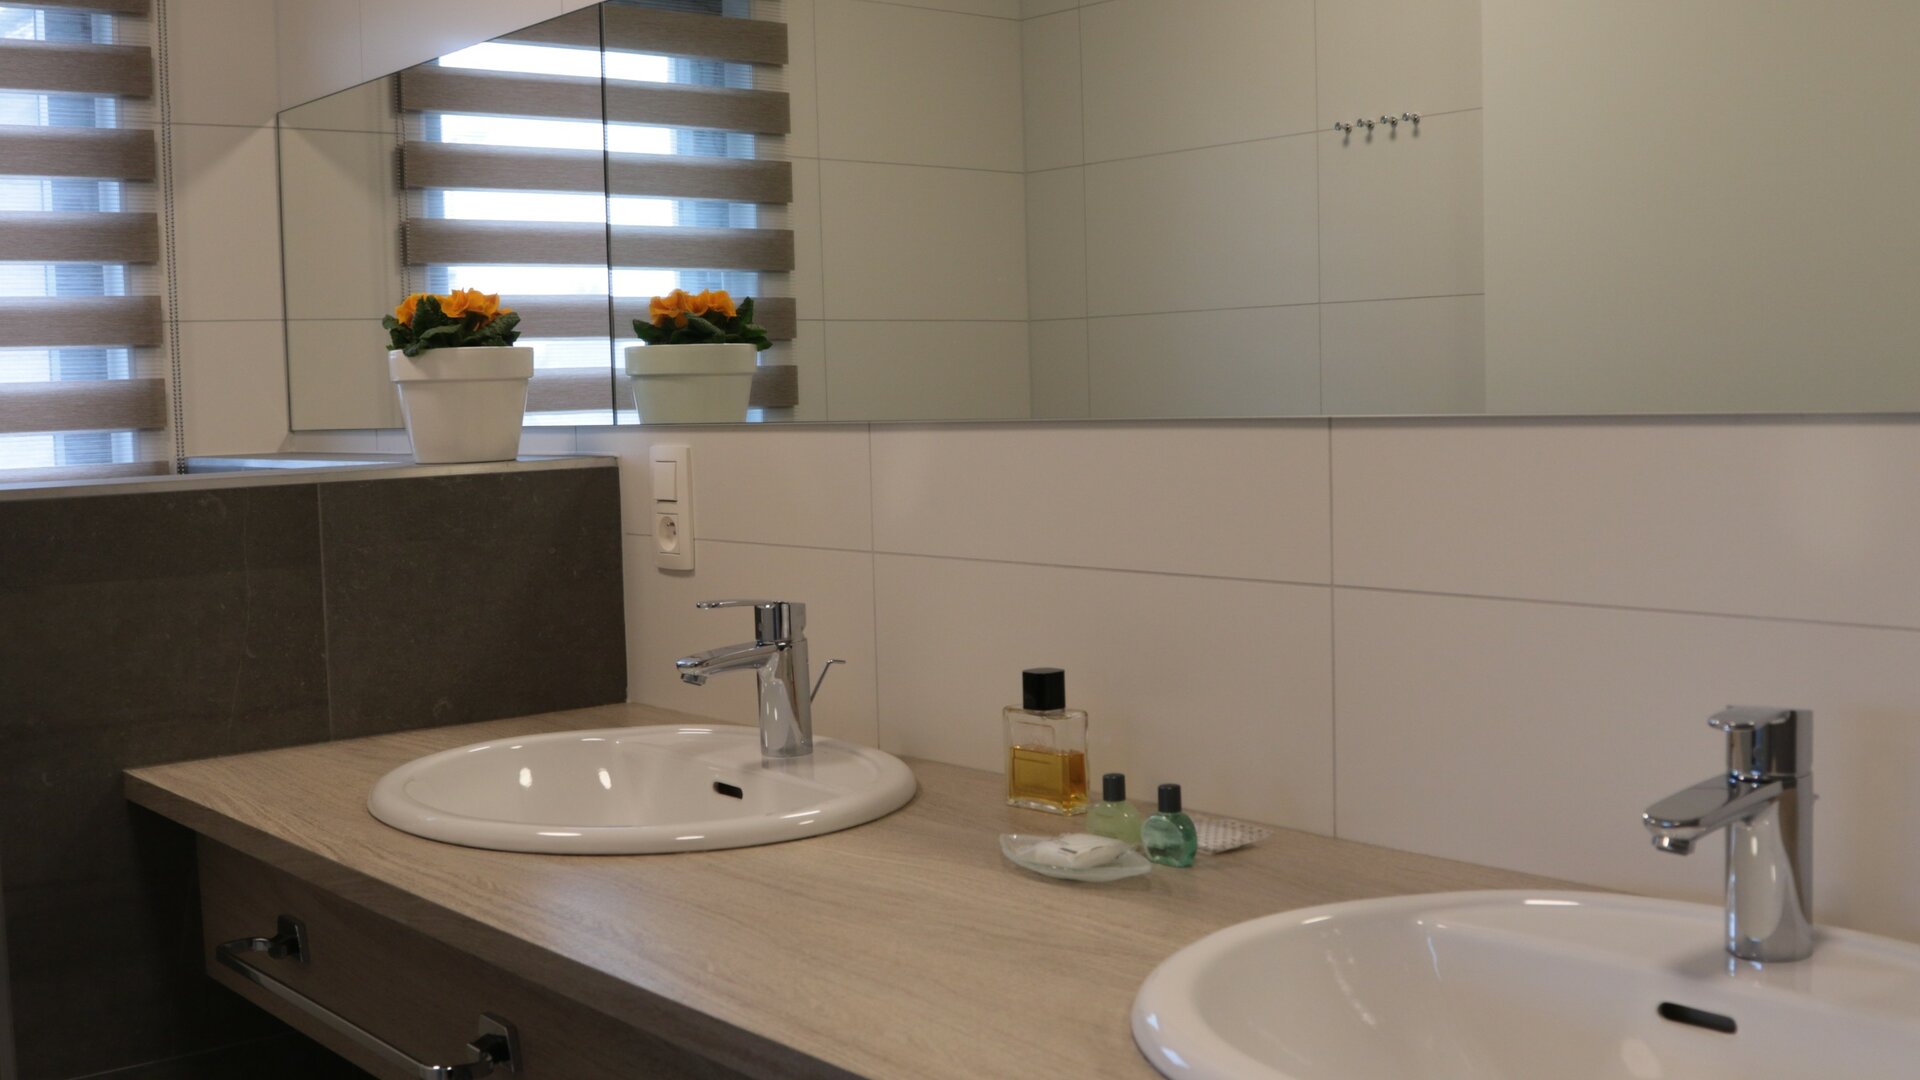 Fossee - Ieder slaapkamer eigen badkamer met douche, lavabo en toilet